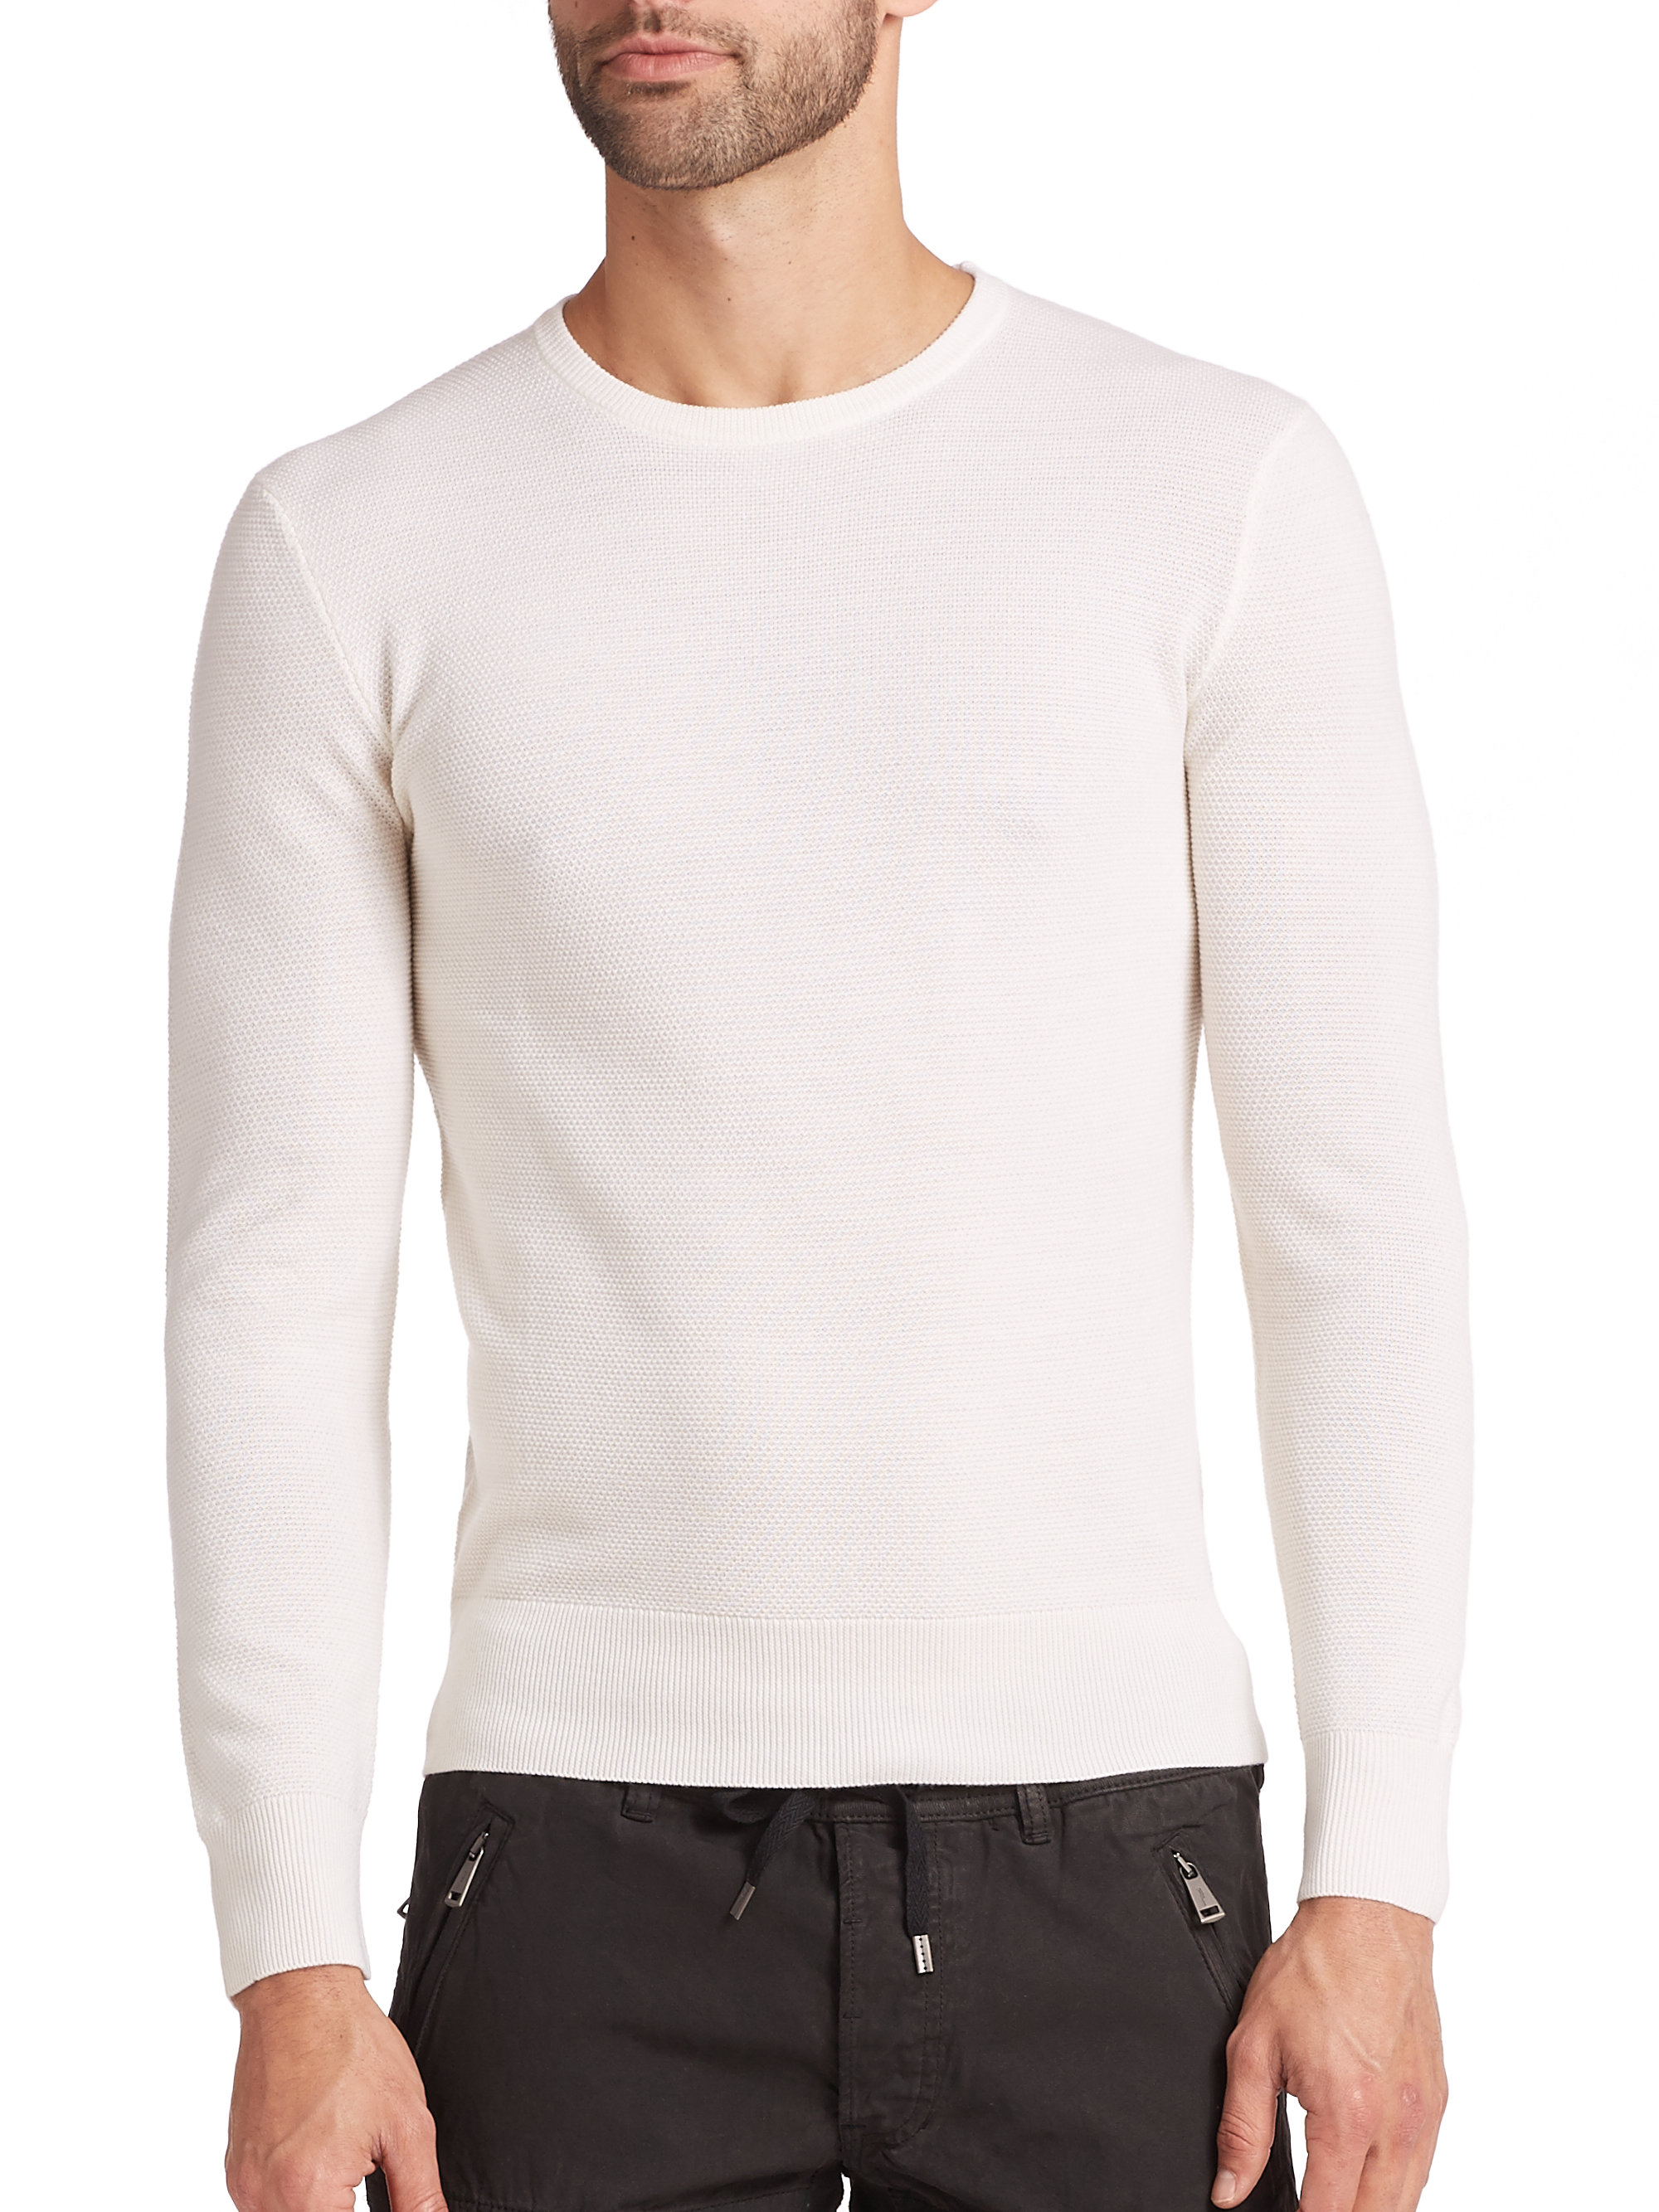 Lyst - Ralph Lauren Textured Crewneck Sweater in White for Men